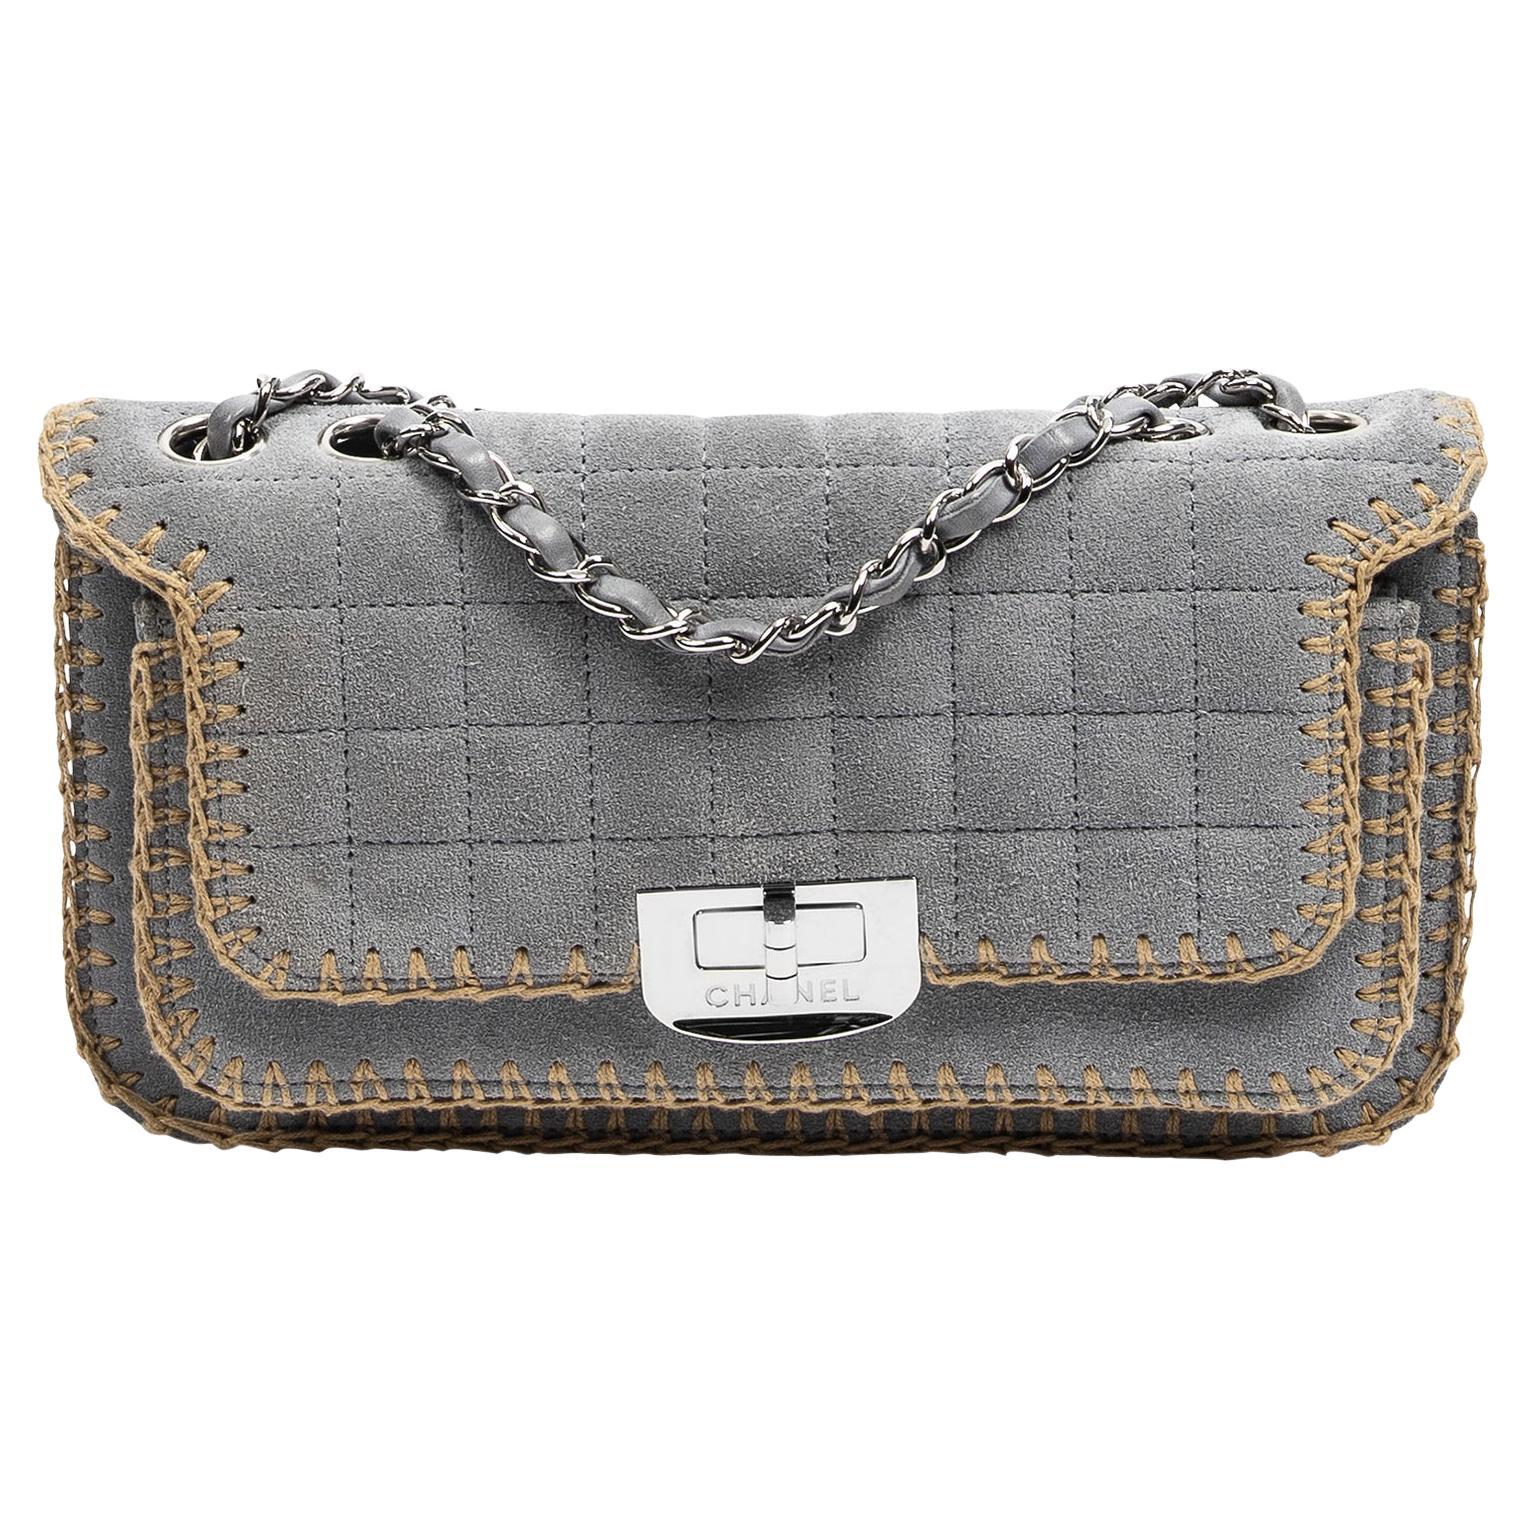 Chanel 2005 Limited Edition Grey Suede Wild Stitch Shoulder Bag For Sale